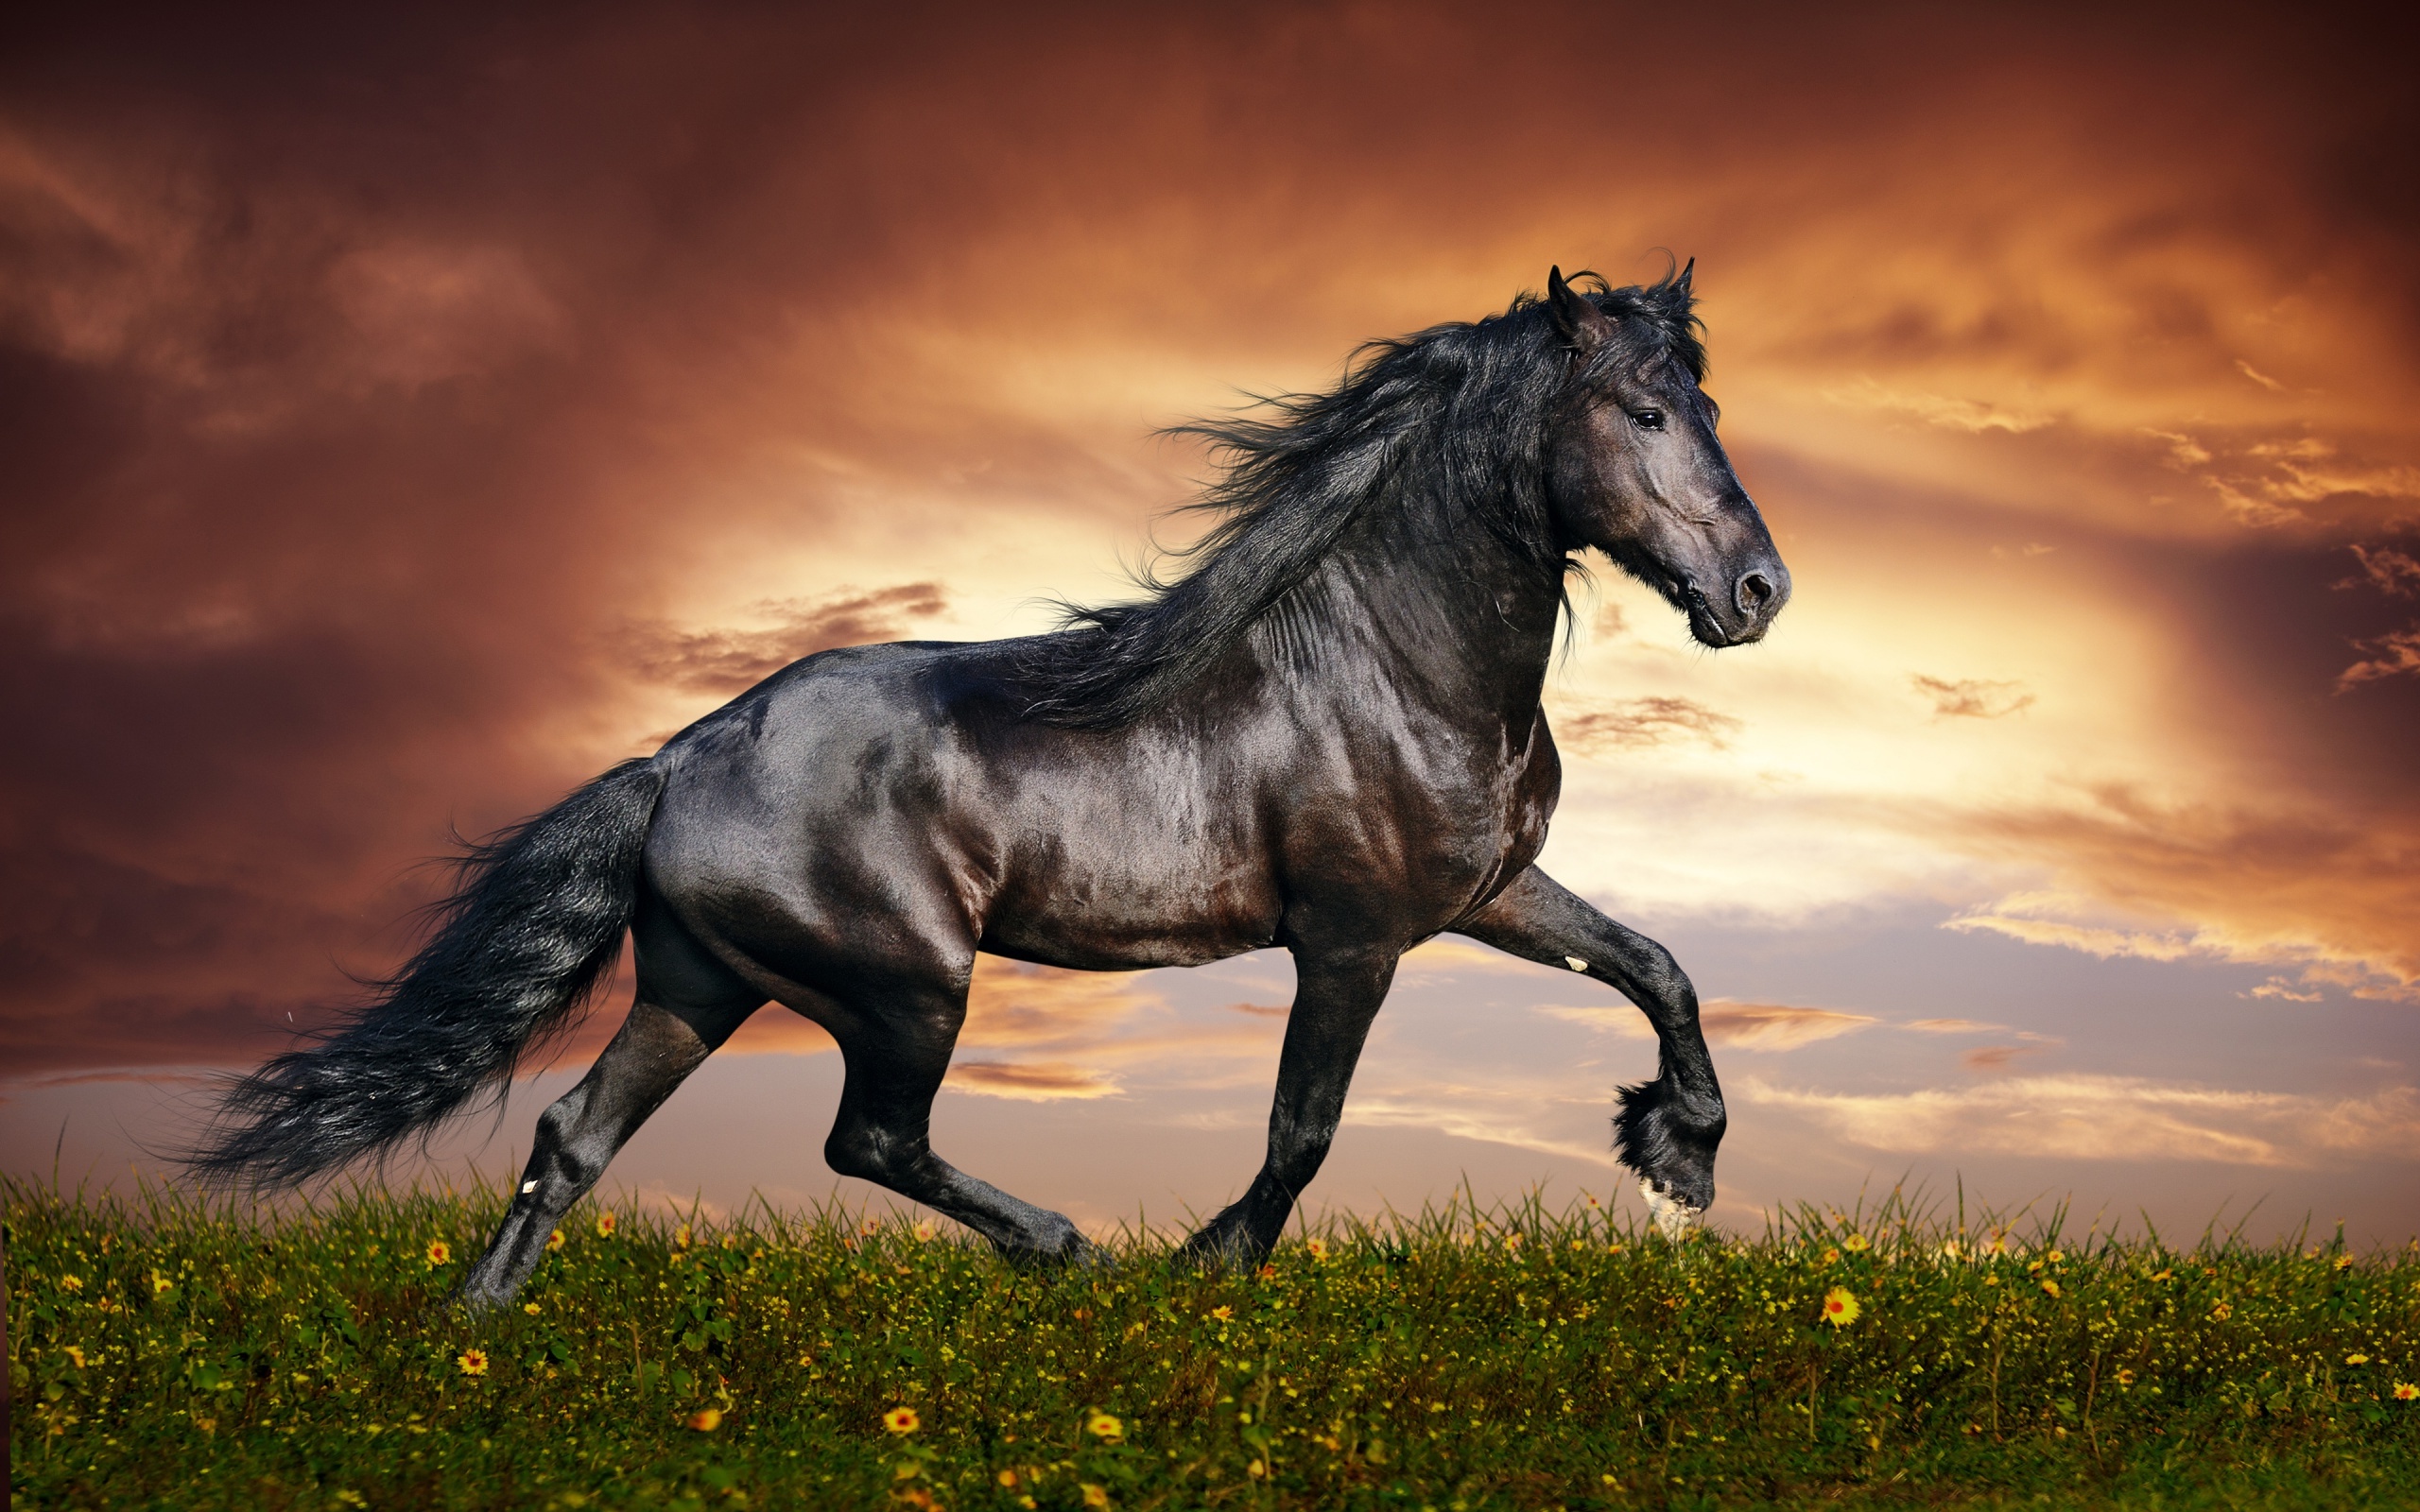 Horse wallpaper free download